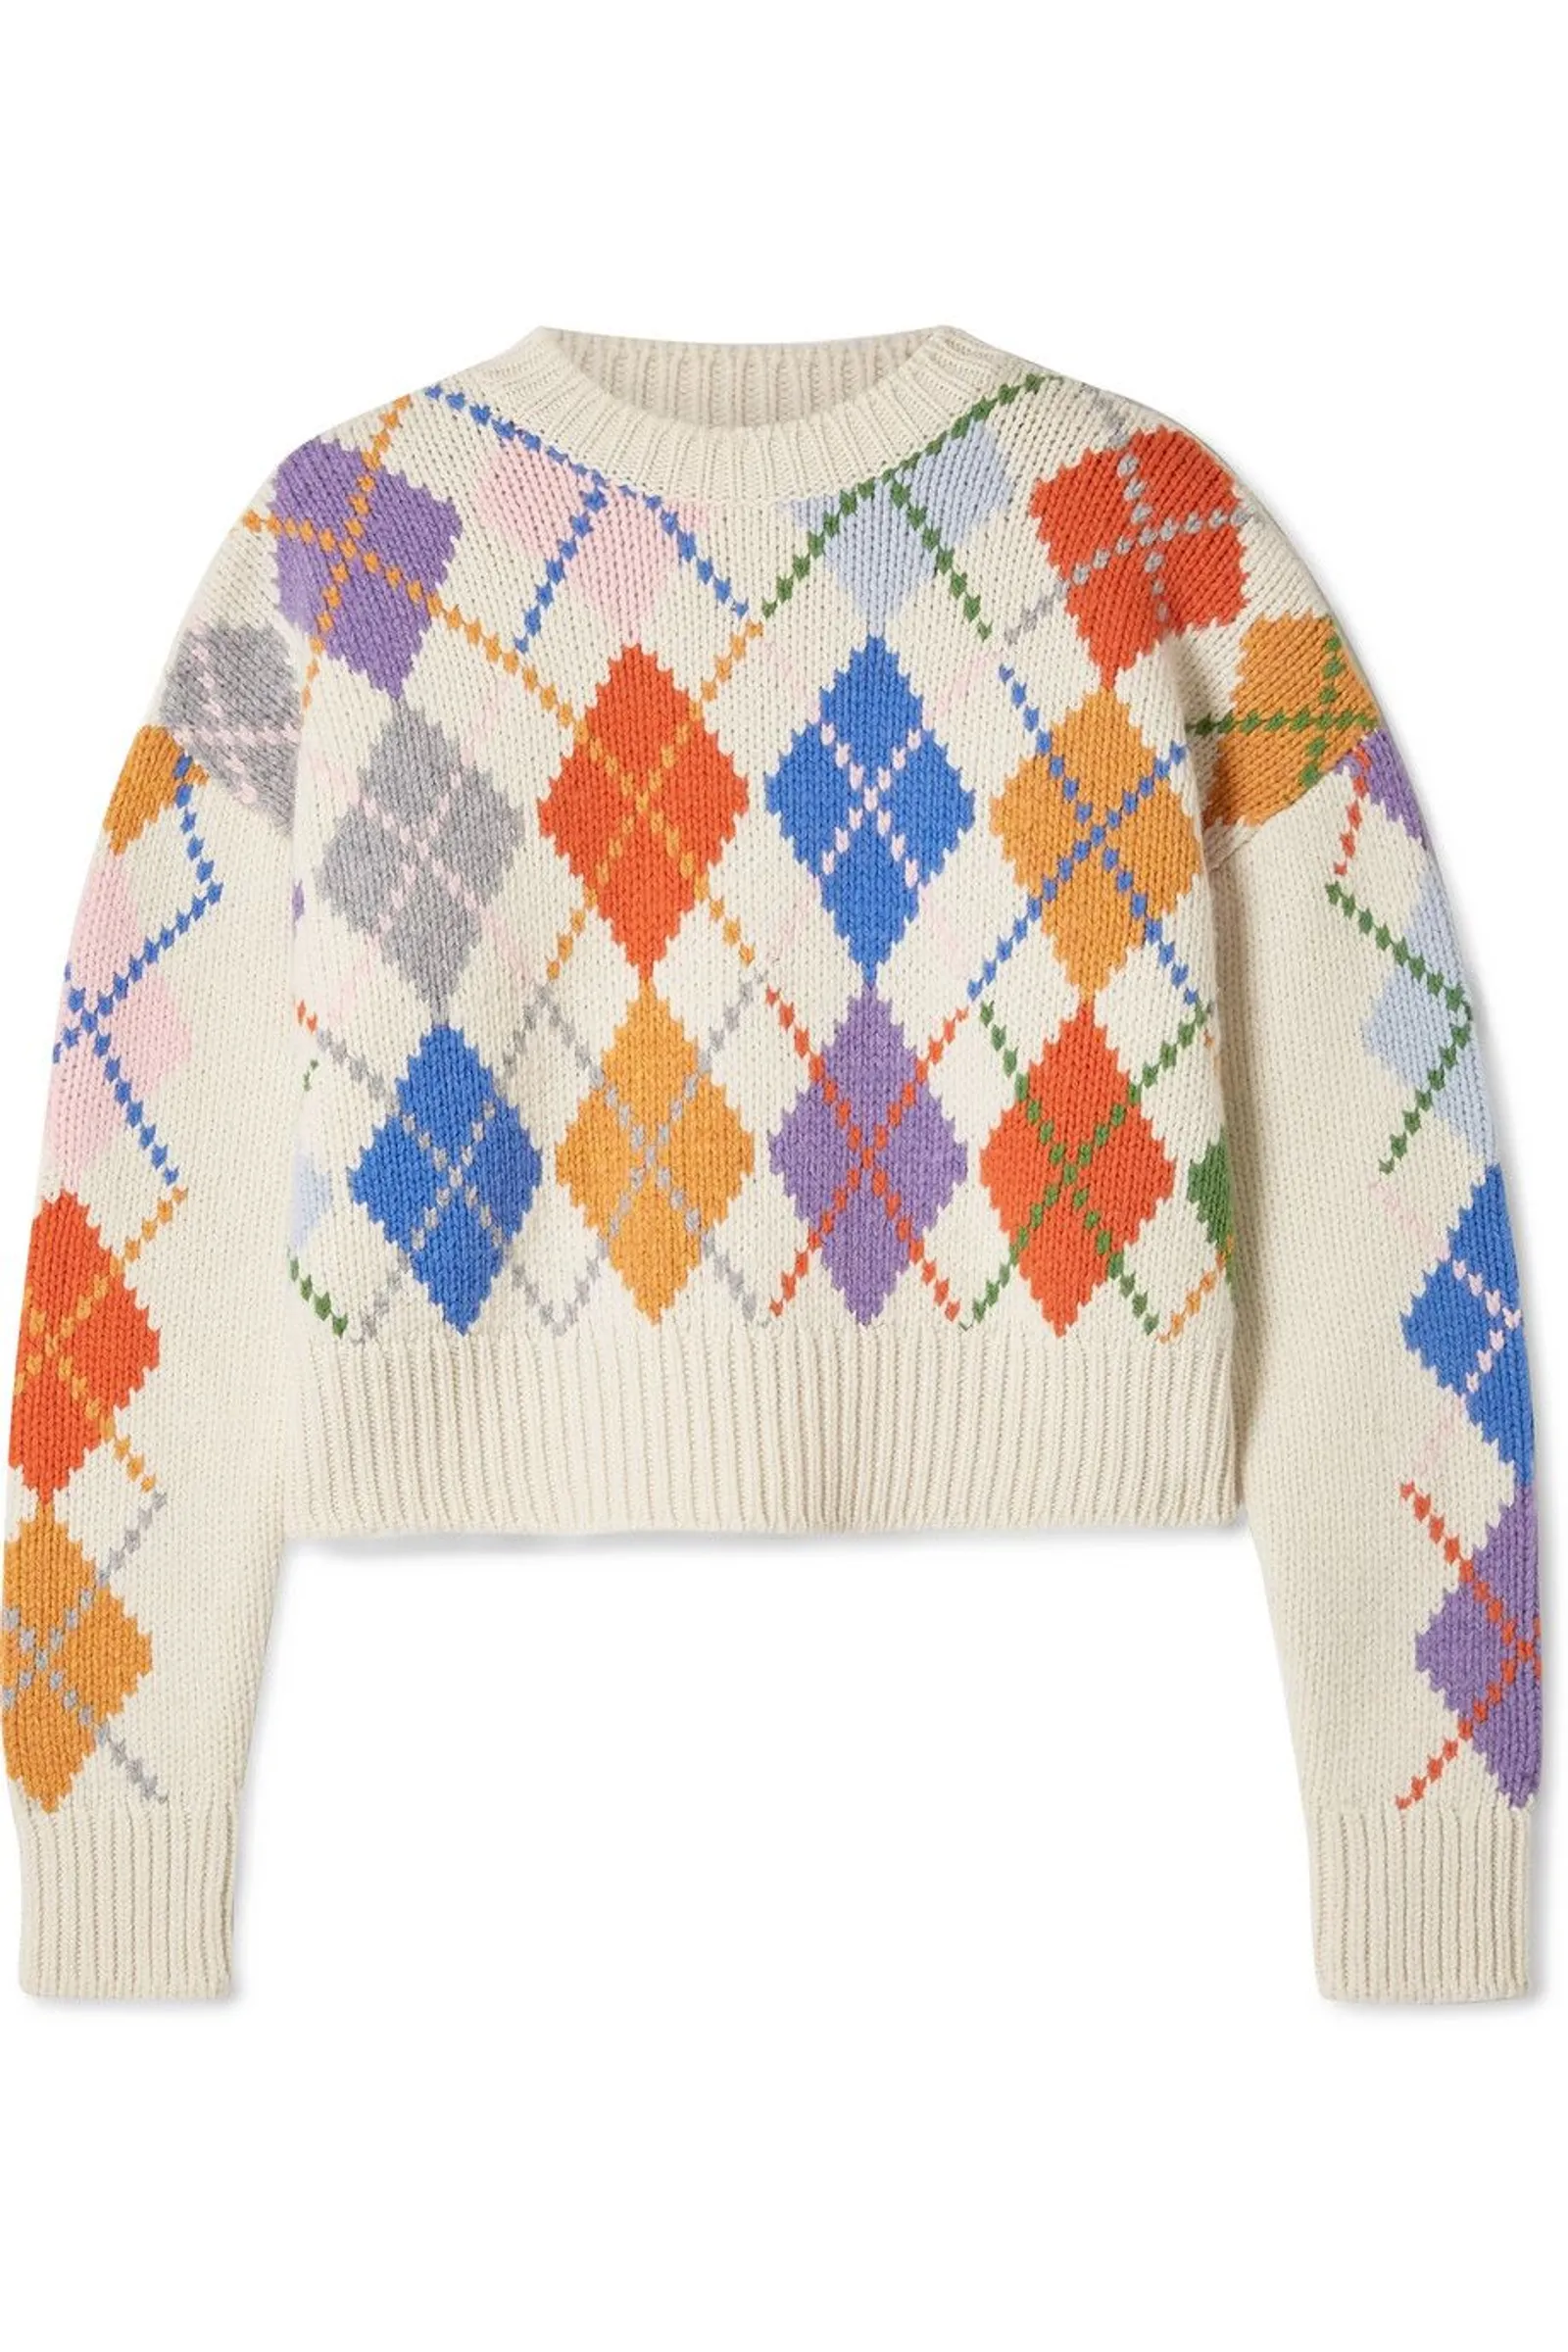 #PopbelaOOTD: Sweater Musim Panas yang Chic